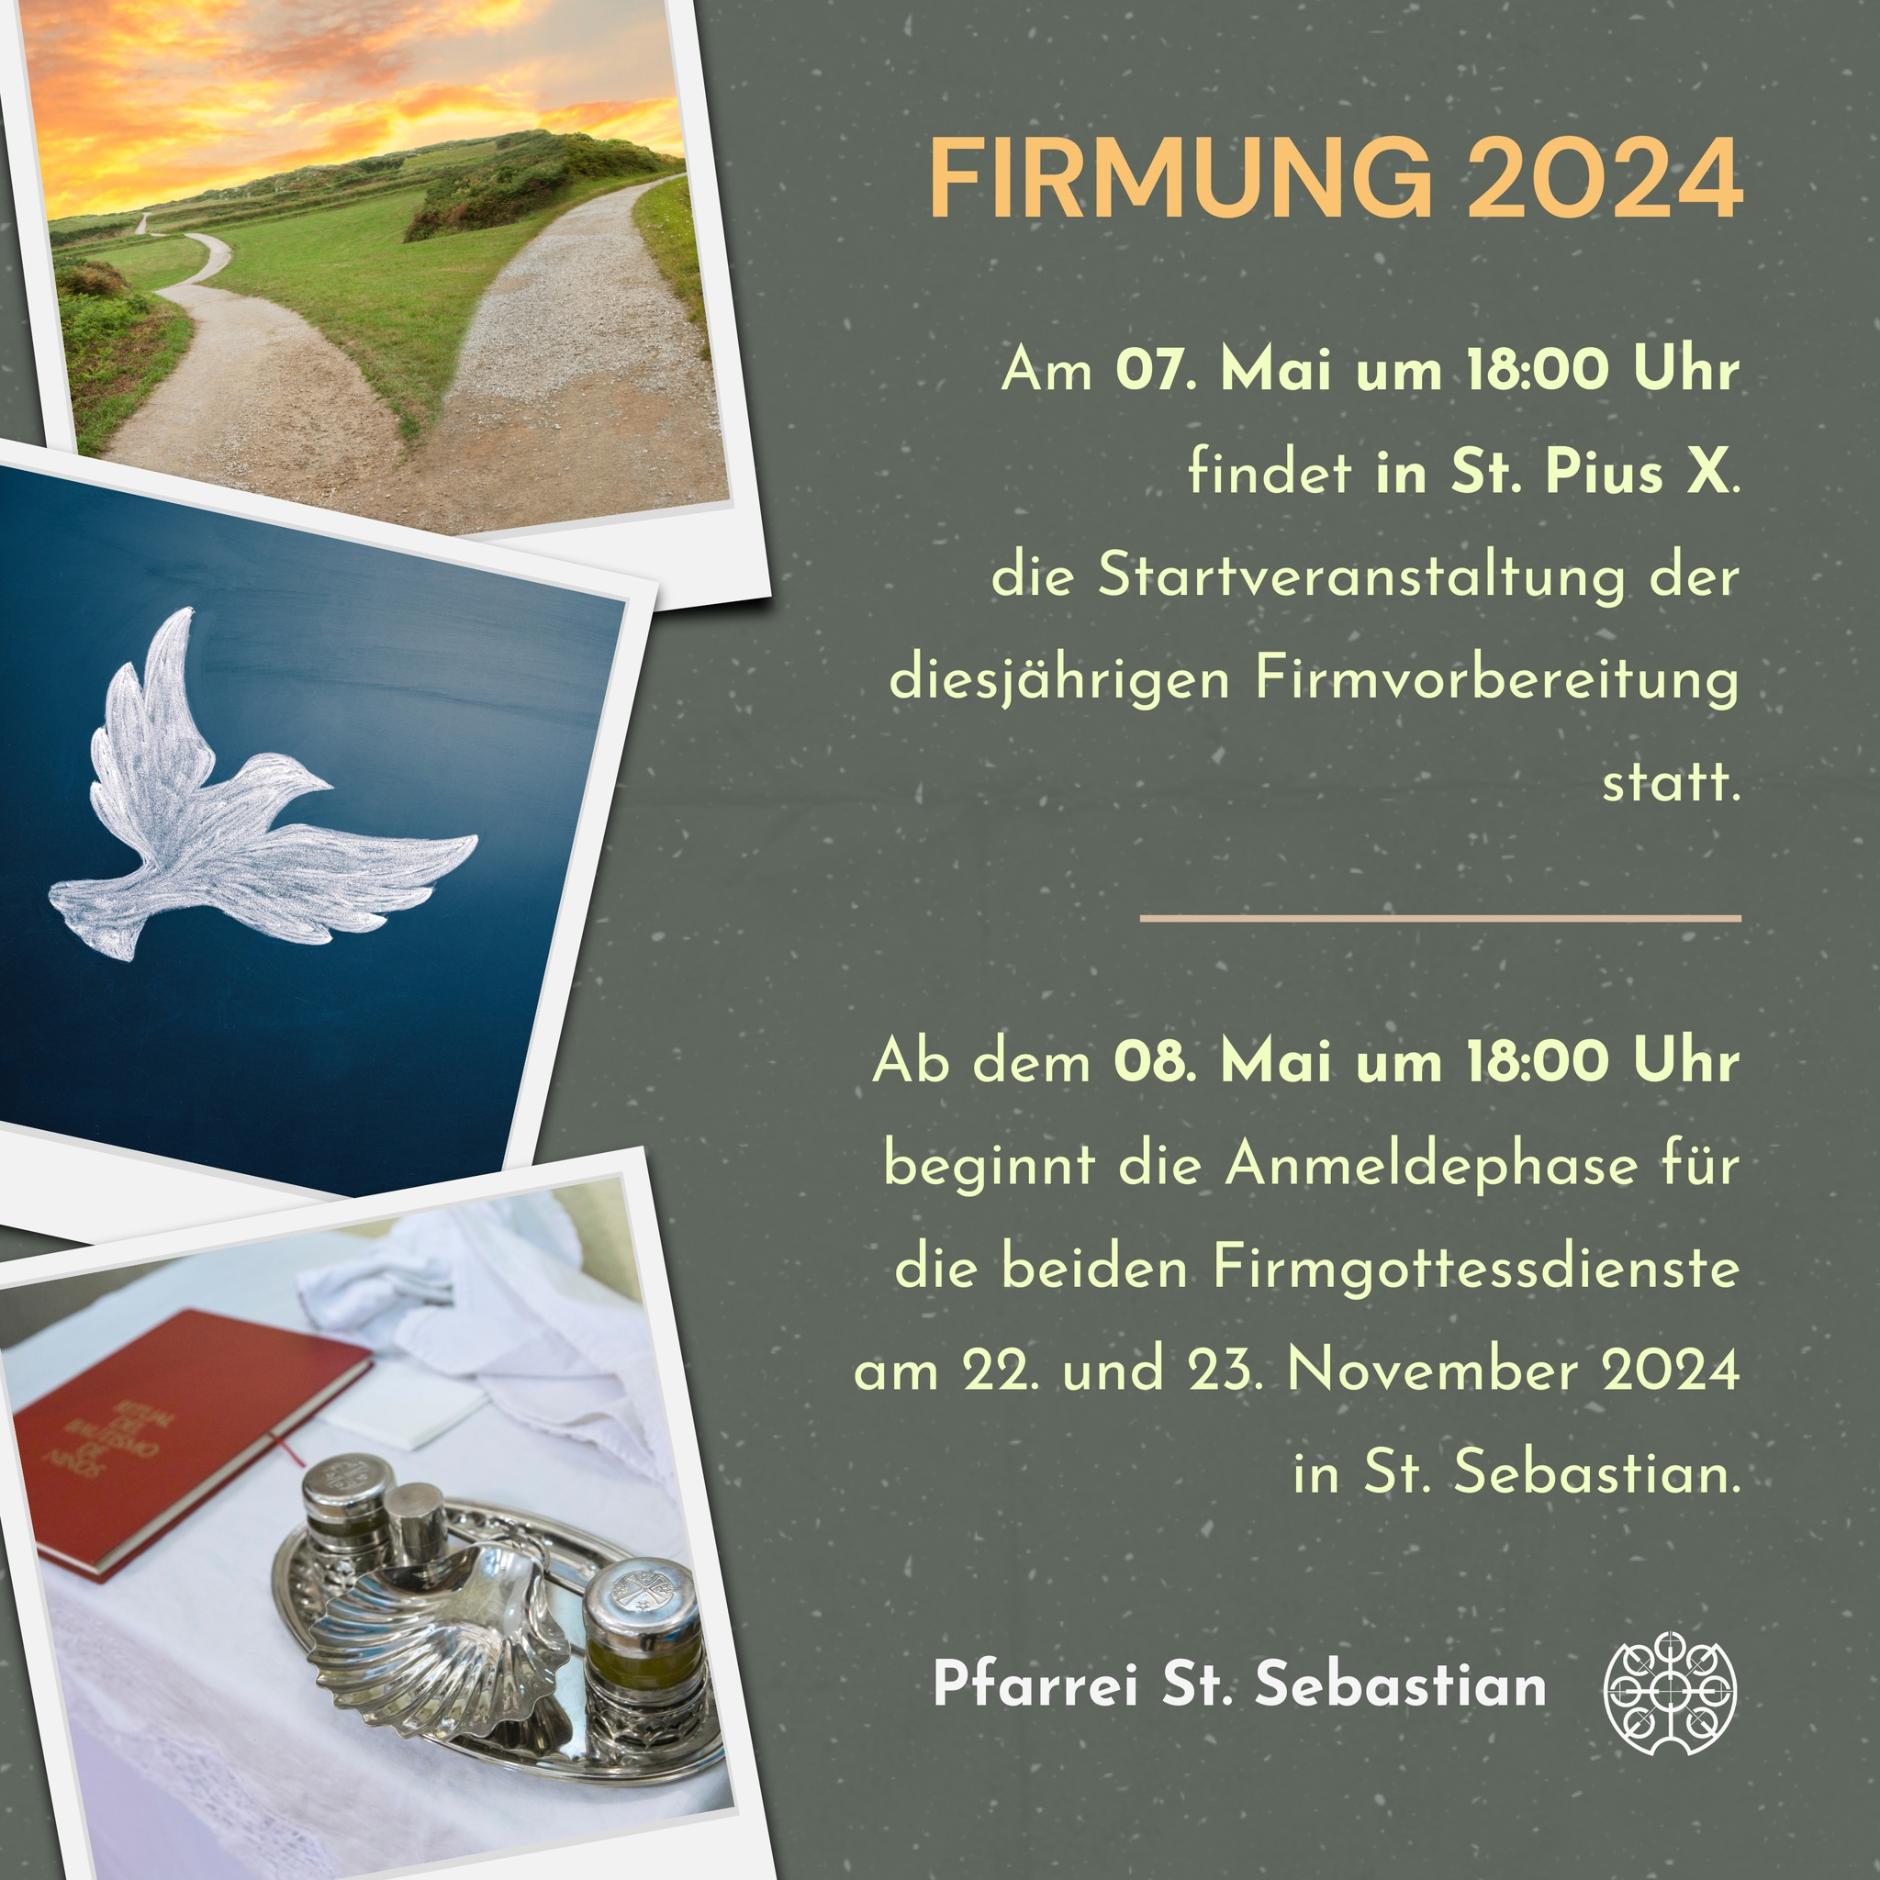 Firmung 2024 (c) Pfarrei St. Sebastian